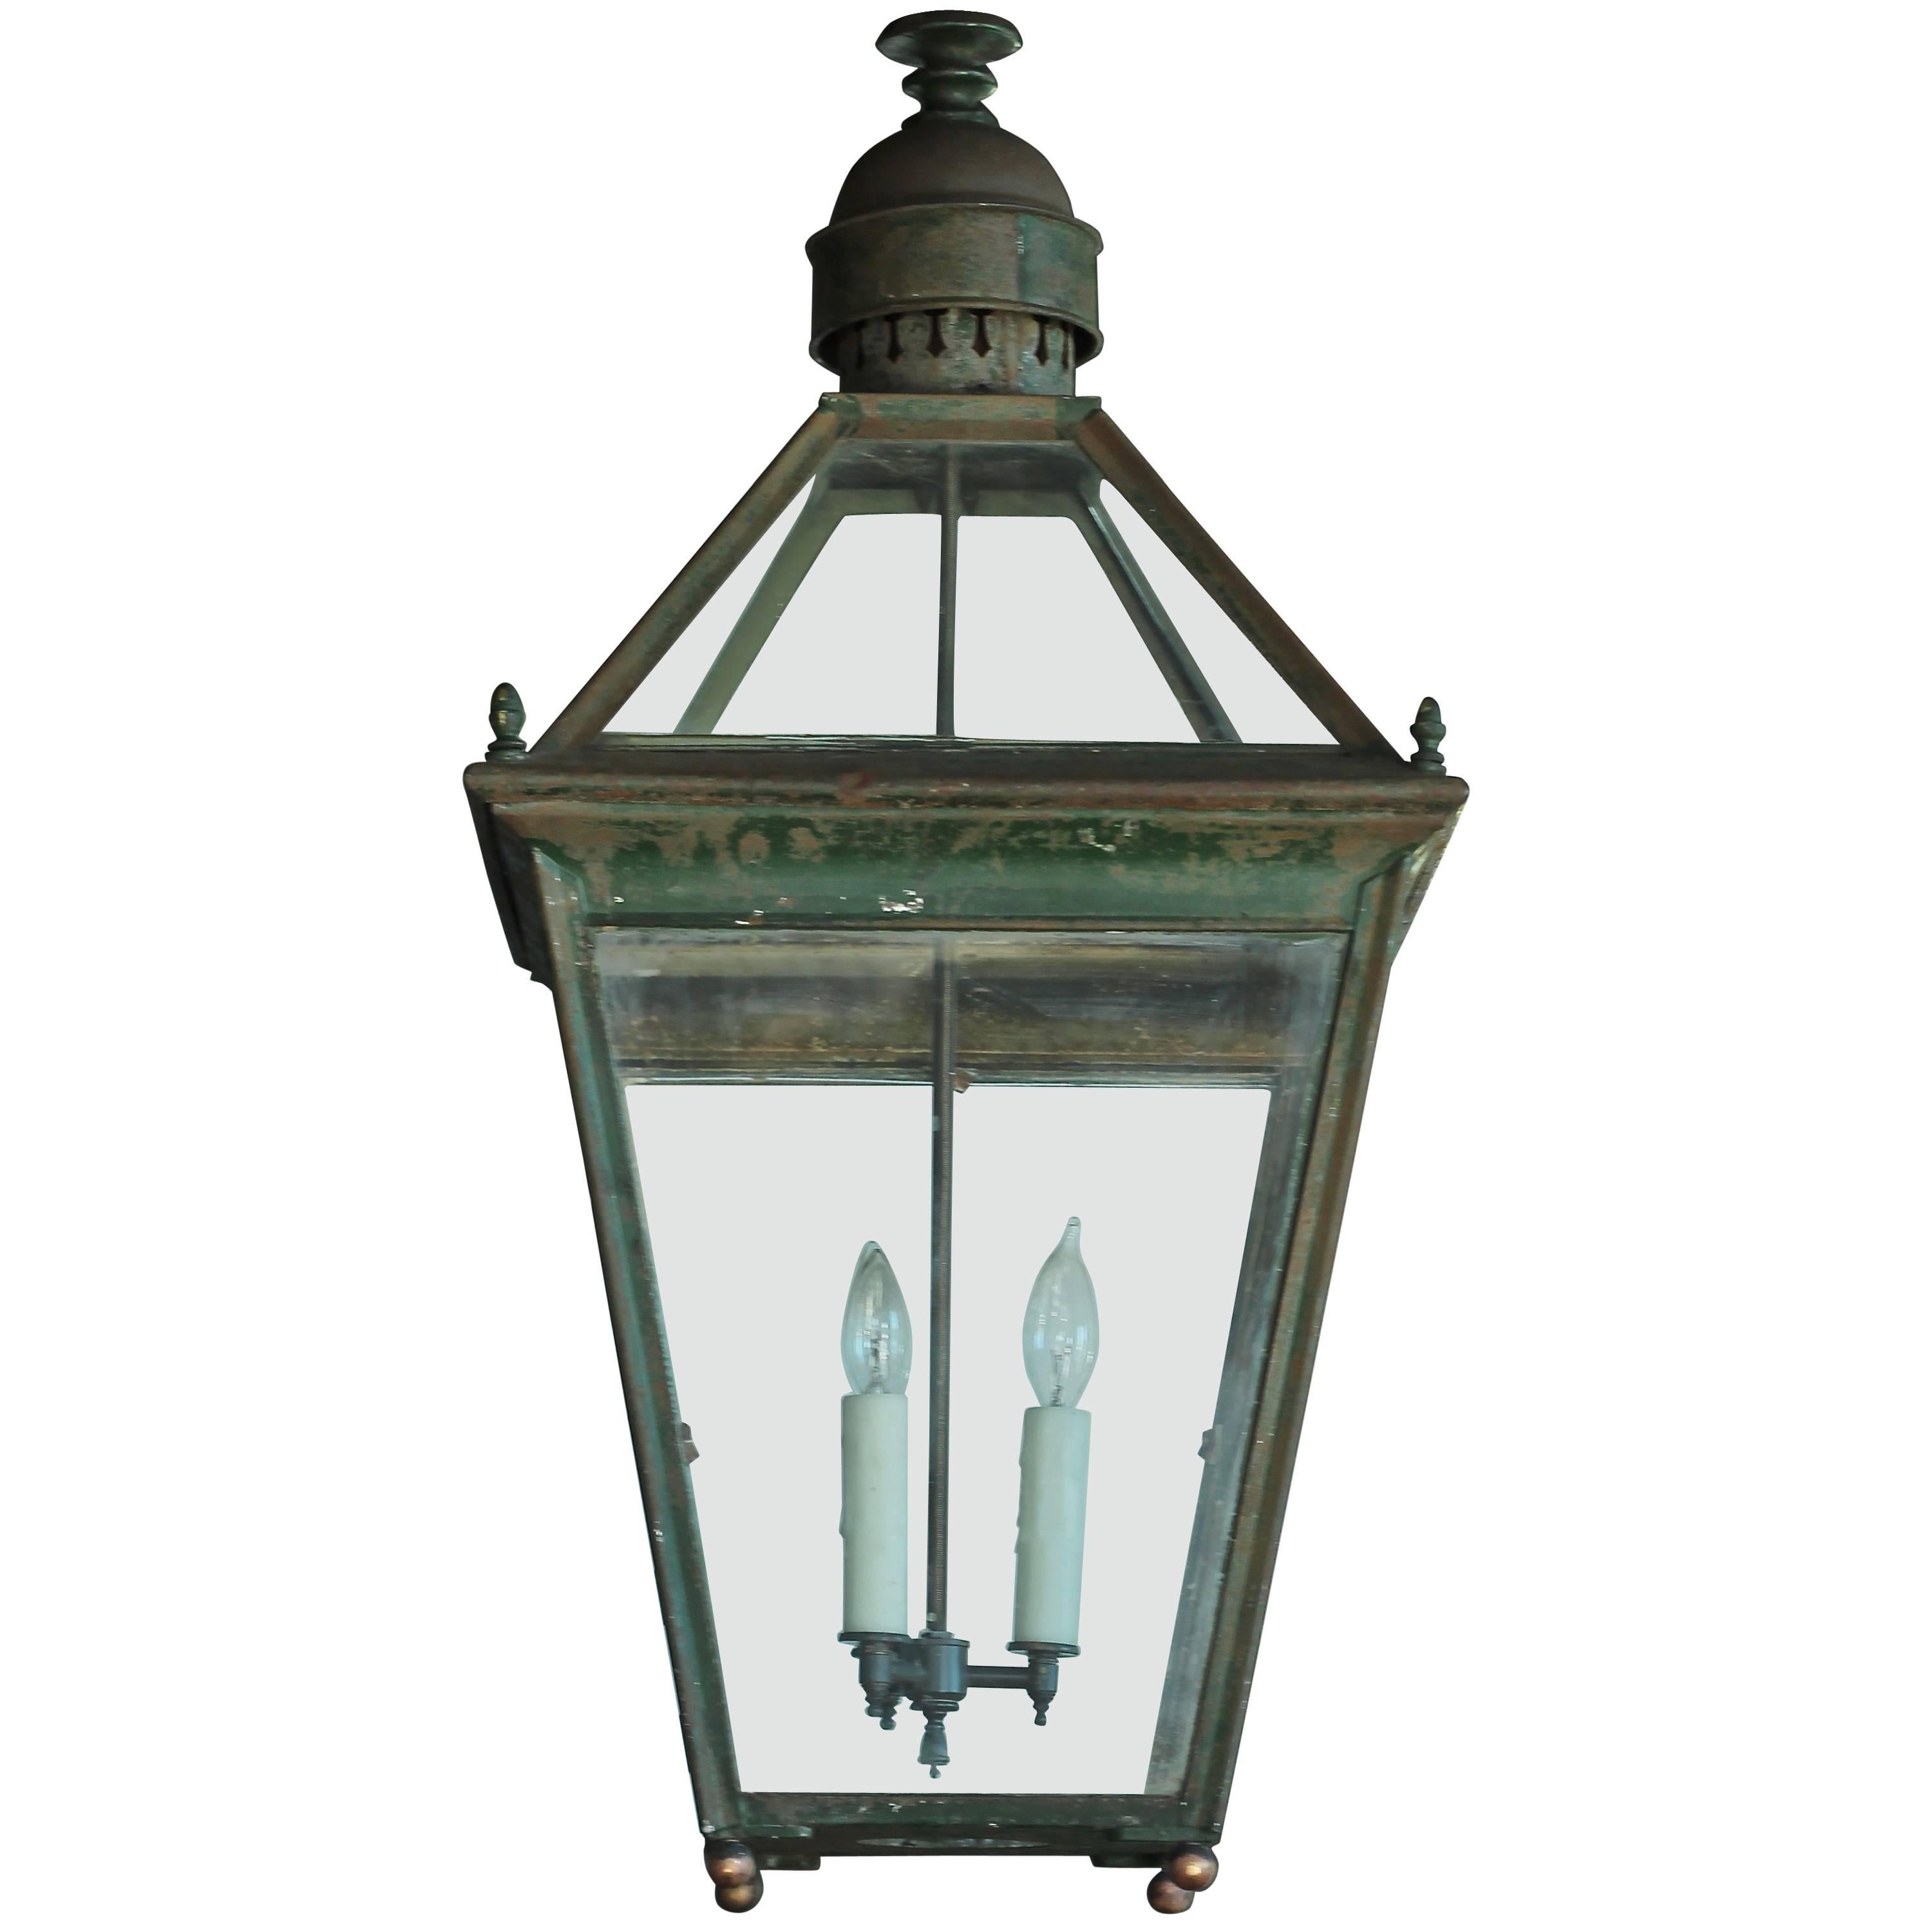 19th Century Lantern by Blakemore Birmingham, England